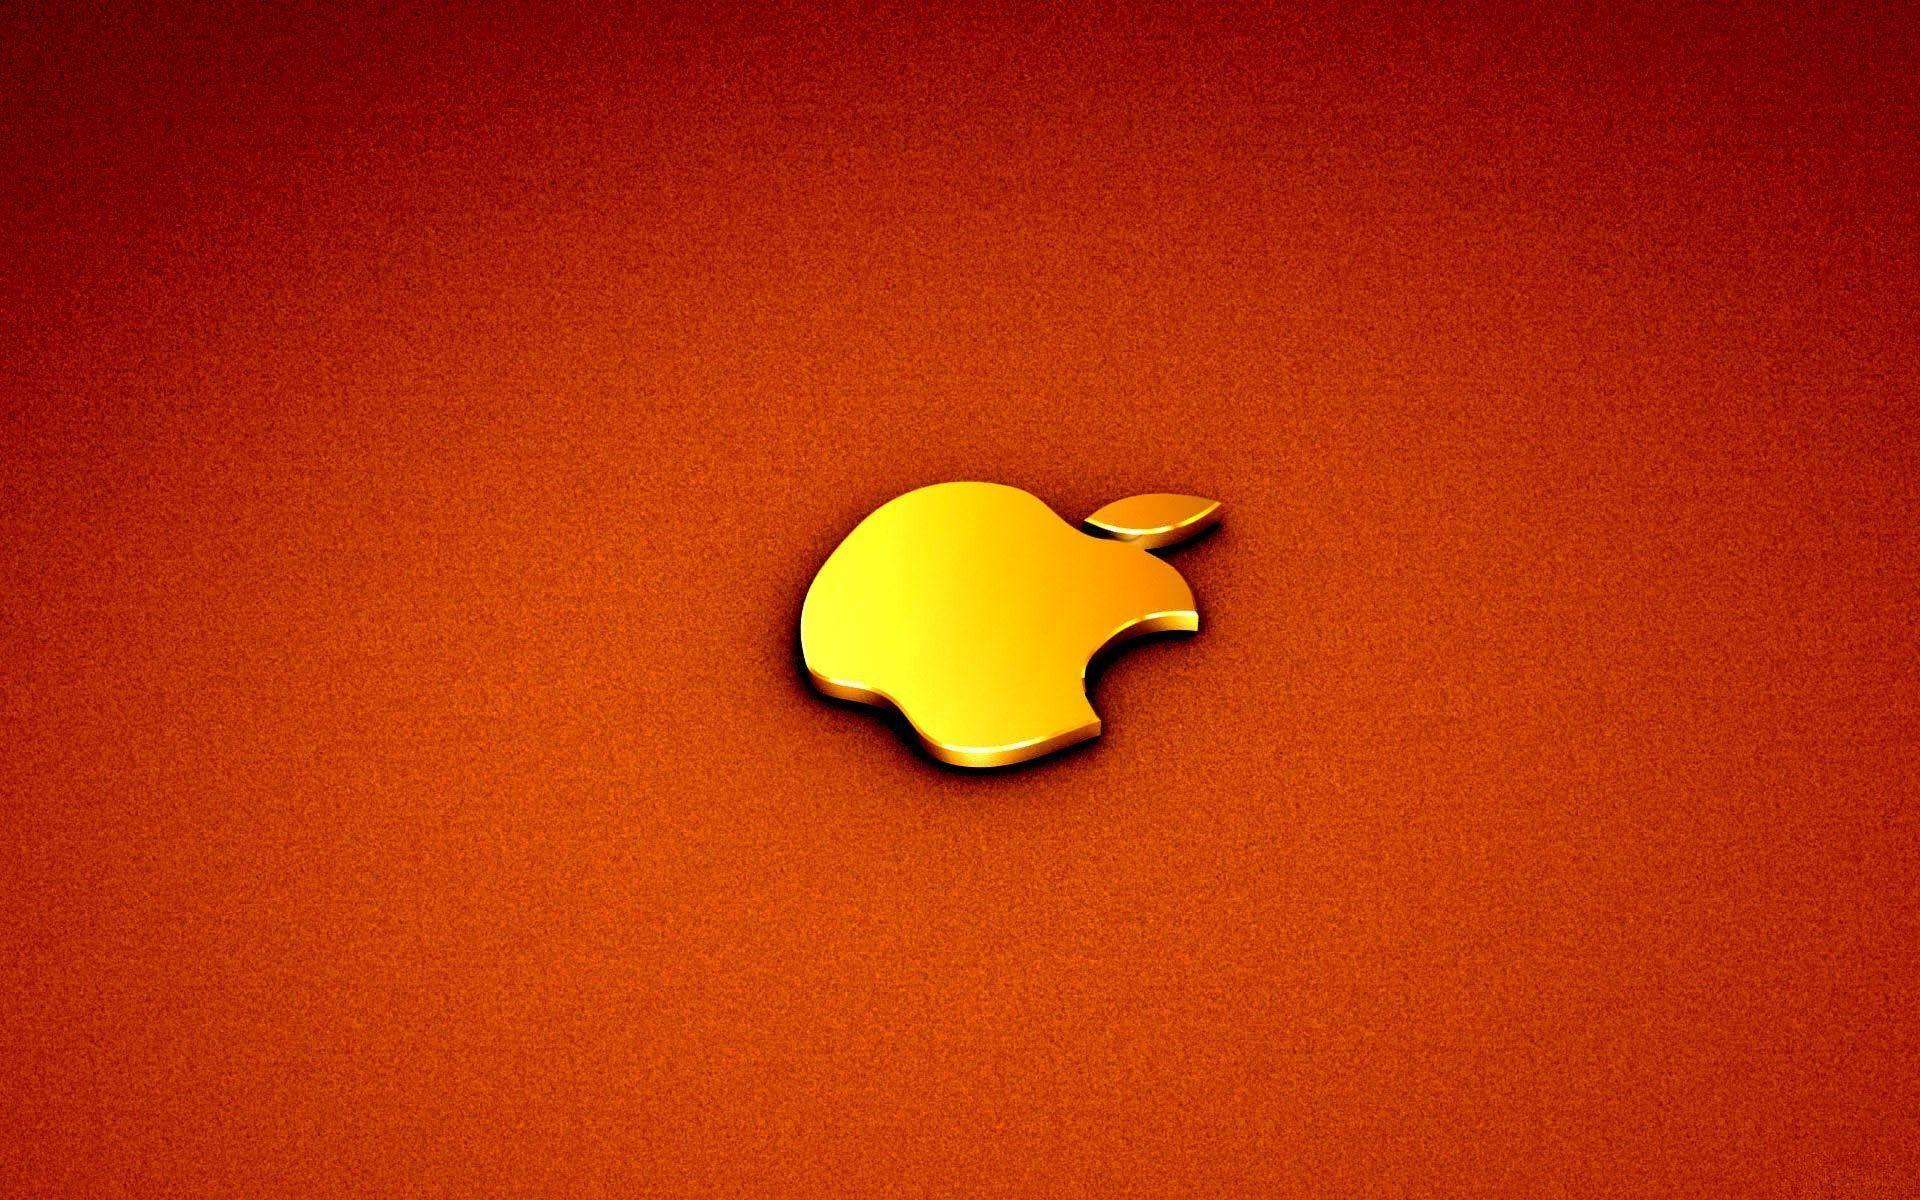 Golden Apple MacBook Pro image Wallpaper. High Quality